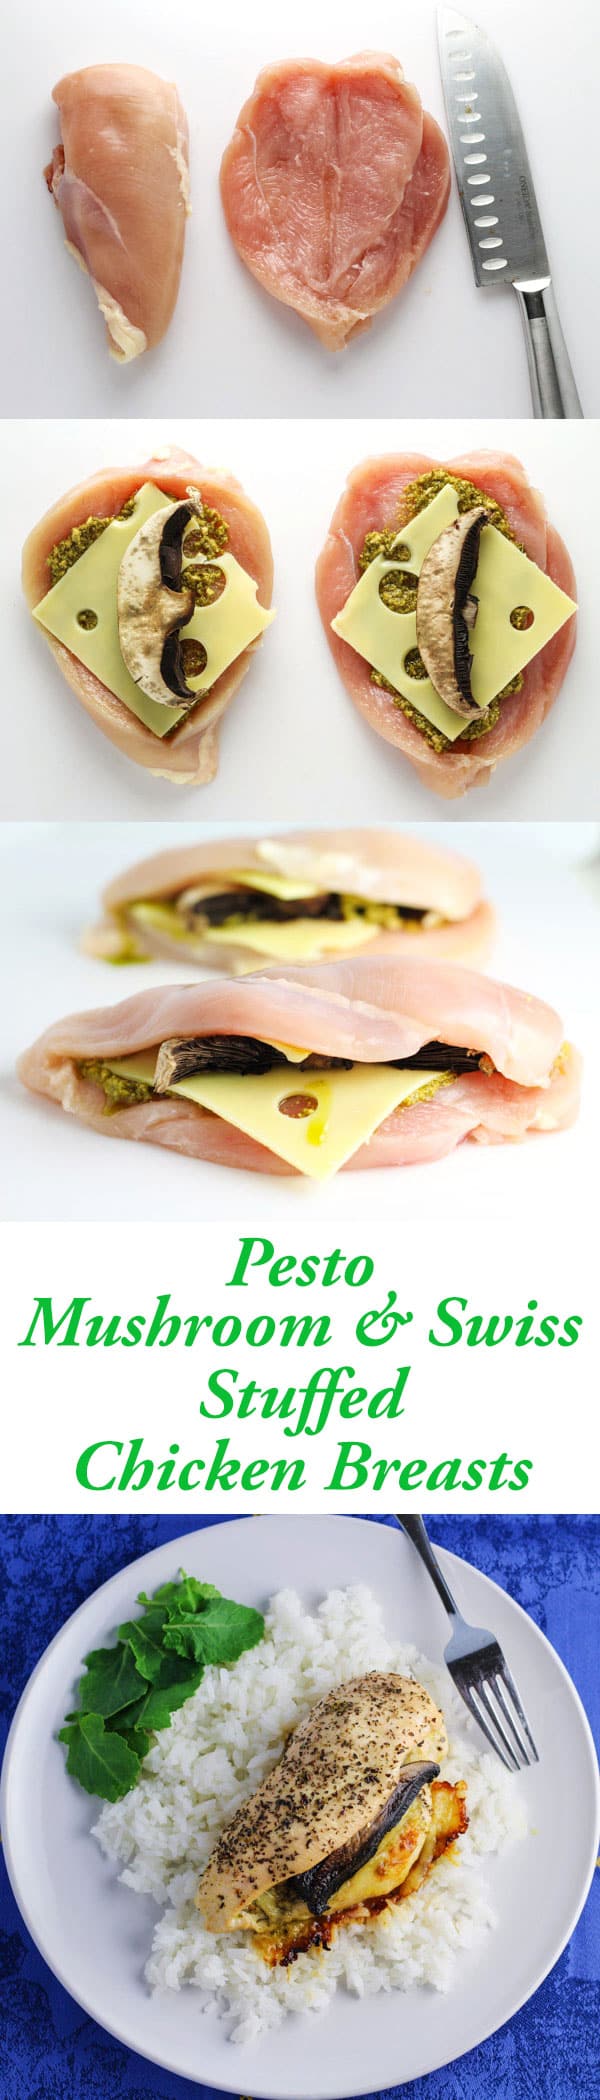 Pesto Mushroom and Swiss Stuffed Chicken Breasts 